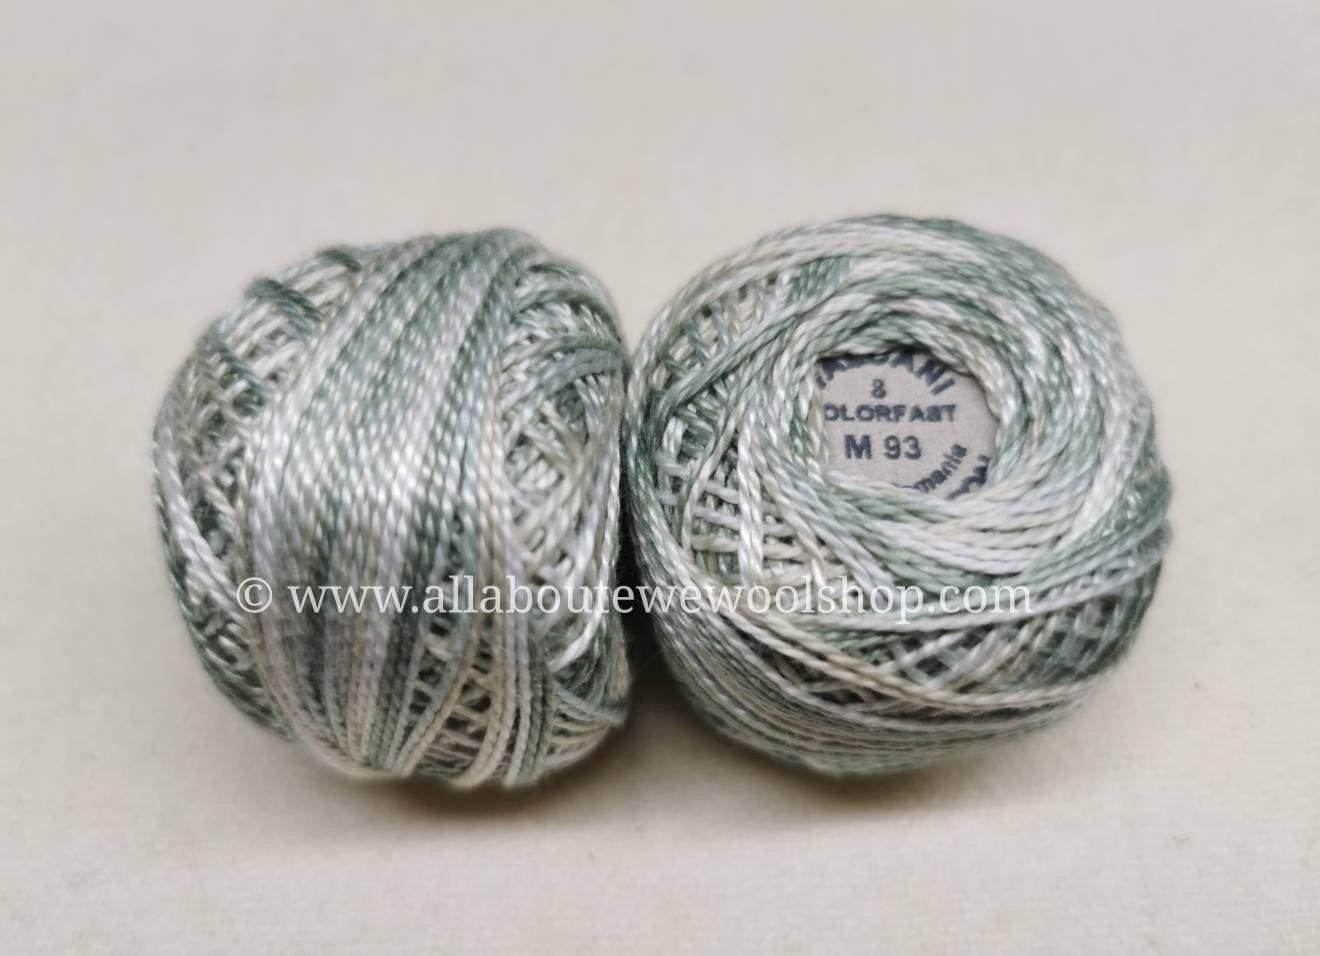 M93 #8 Valdani Pearl/Perle Cotton Thread - All About Ewe Wool Shop